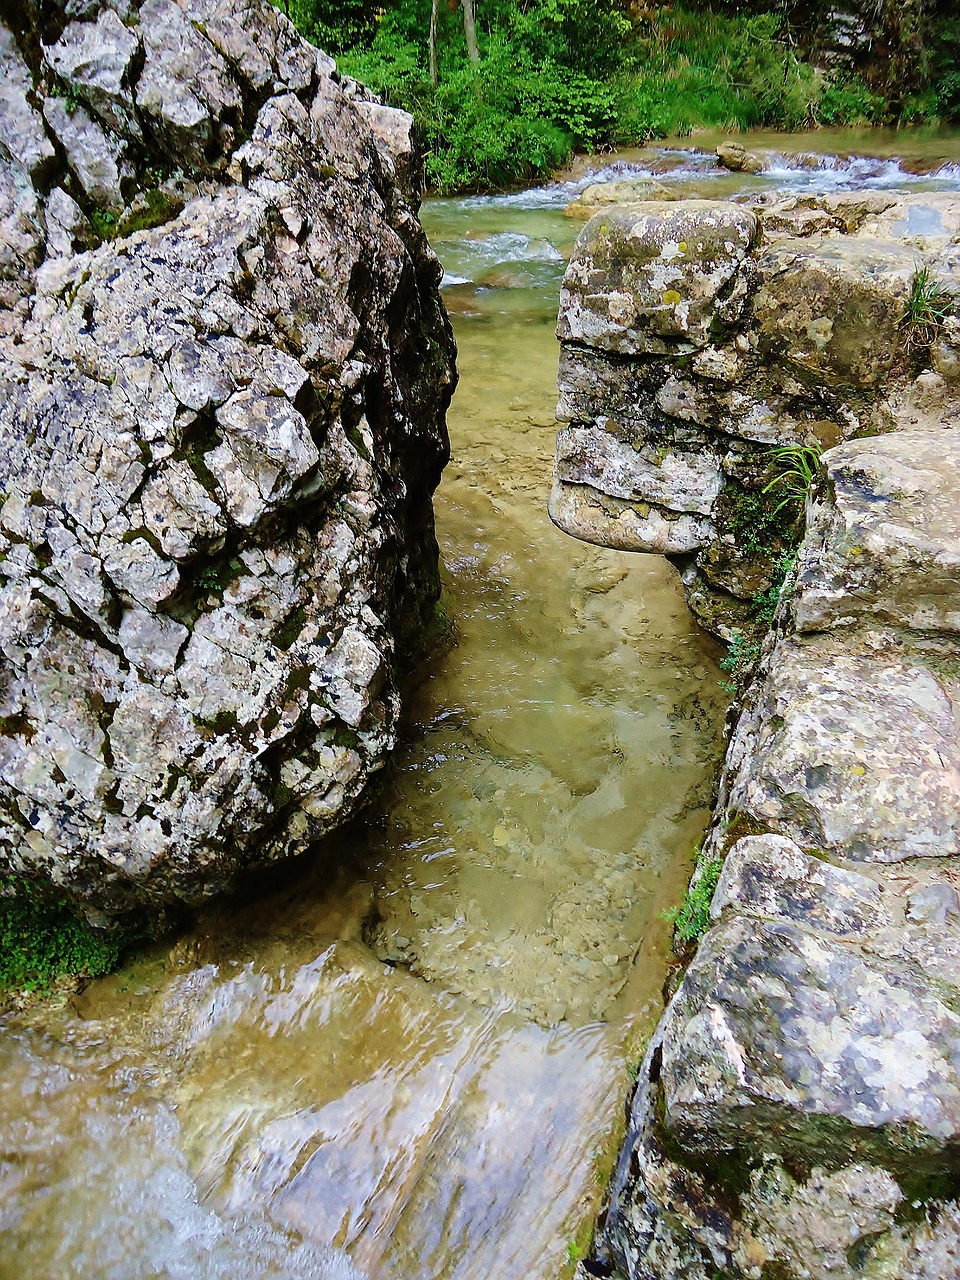 a stream running through a lush green forest, les nabis, rock texture, limestone, stone floor, water caustics